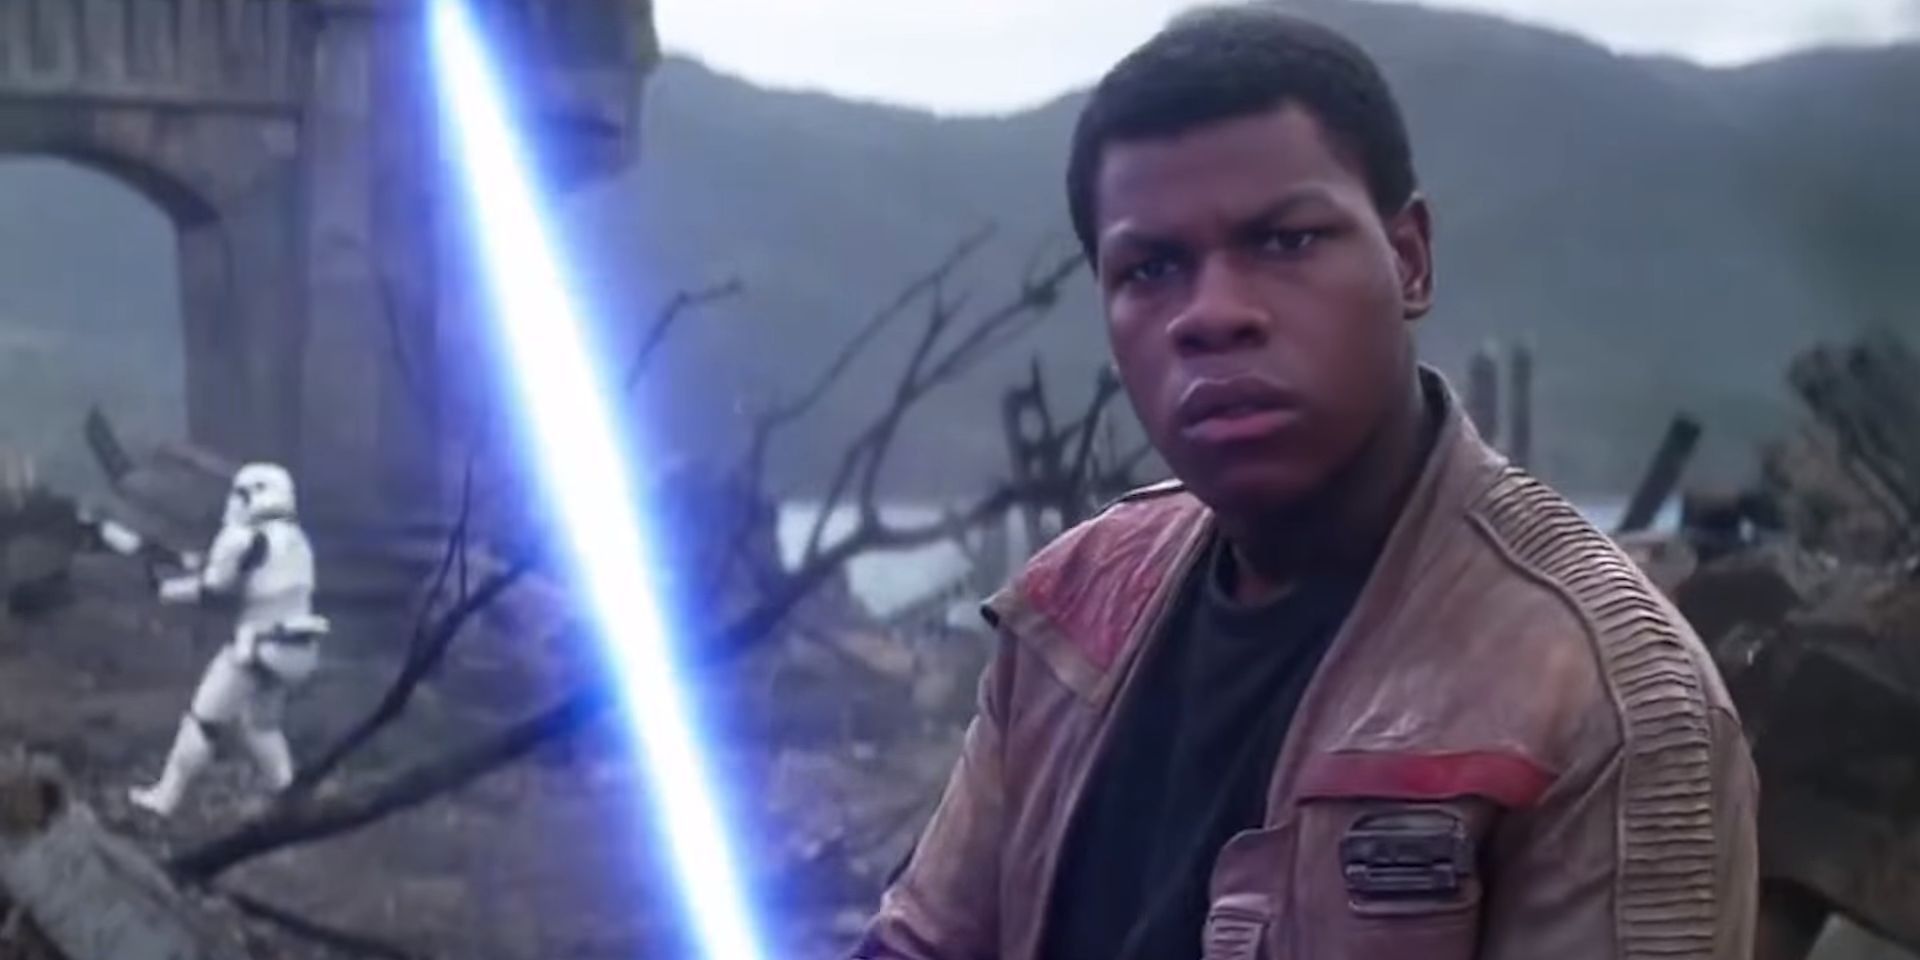 Finn wielding a lightsaber in Star Wars The Force Awakens